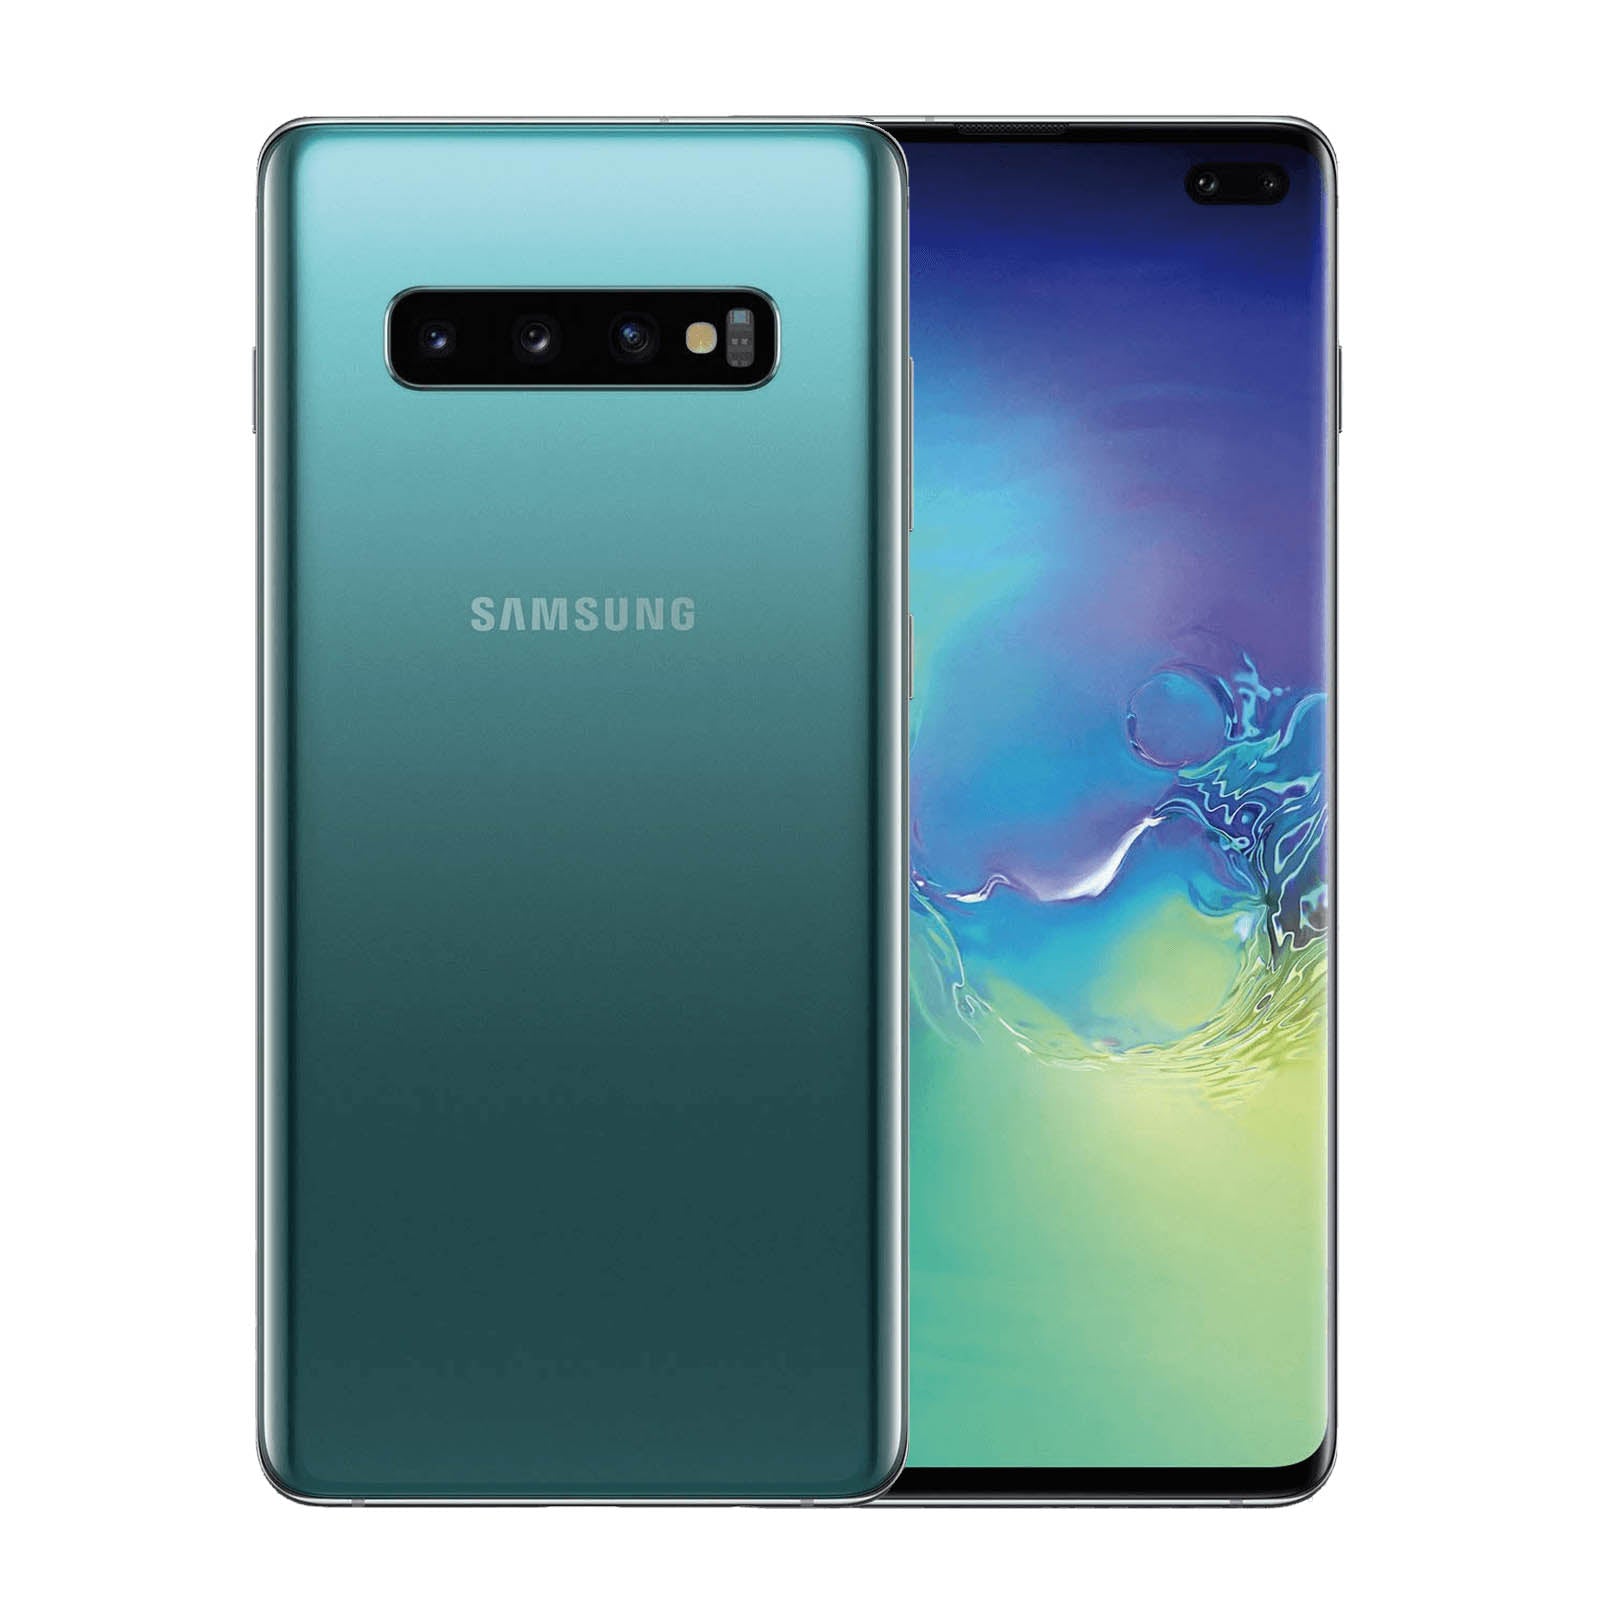 Samsung Galaxy S10 Plus 128GB Prism Green Very good - Unlocked